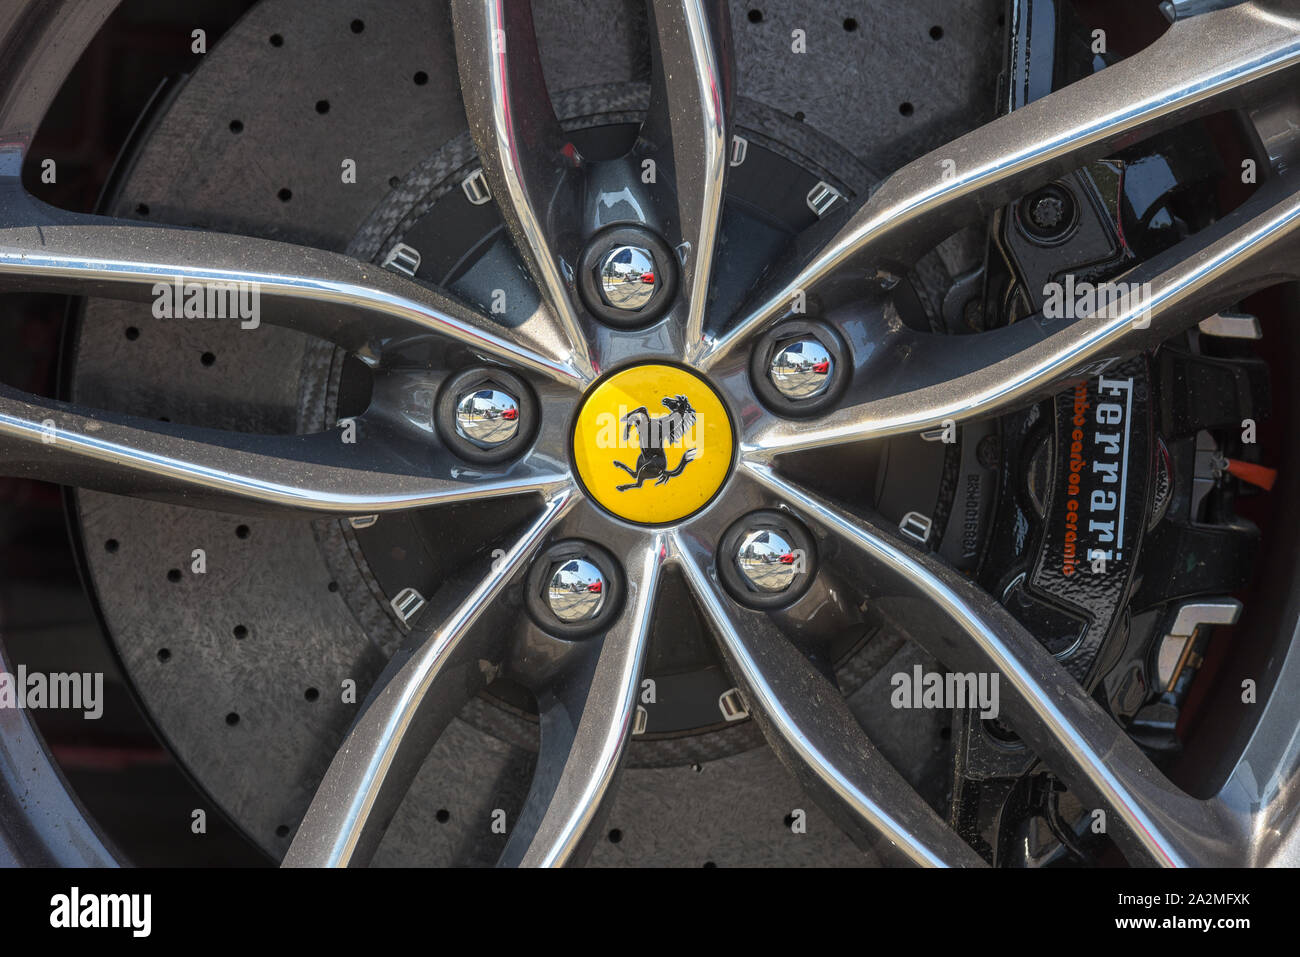 Lugano, Switzerland - 23 March 2010: Ferrari logo on the wheel of a car Stock Photo